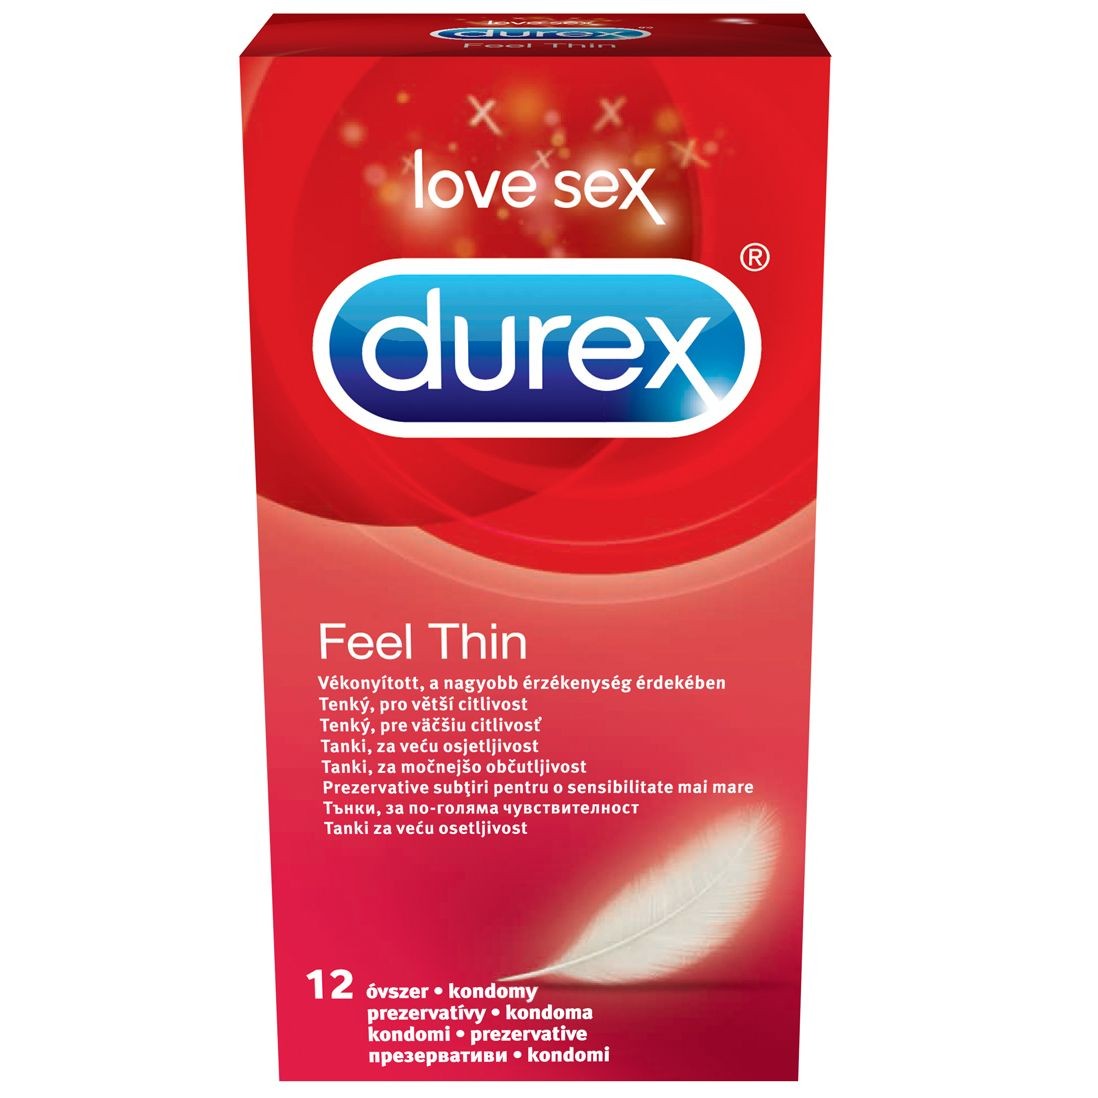 Durex feel thin x 12 prezervative